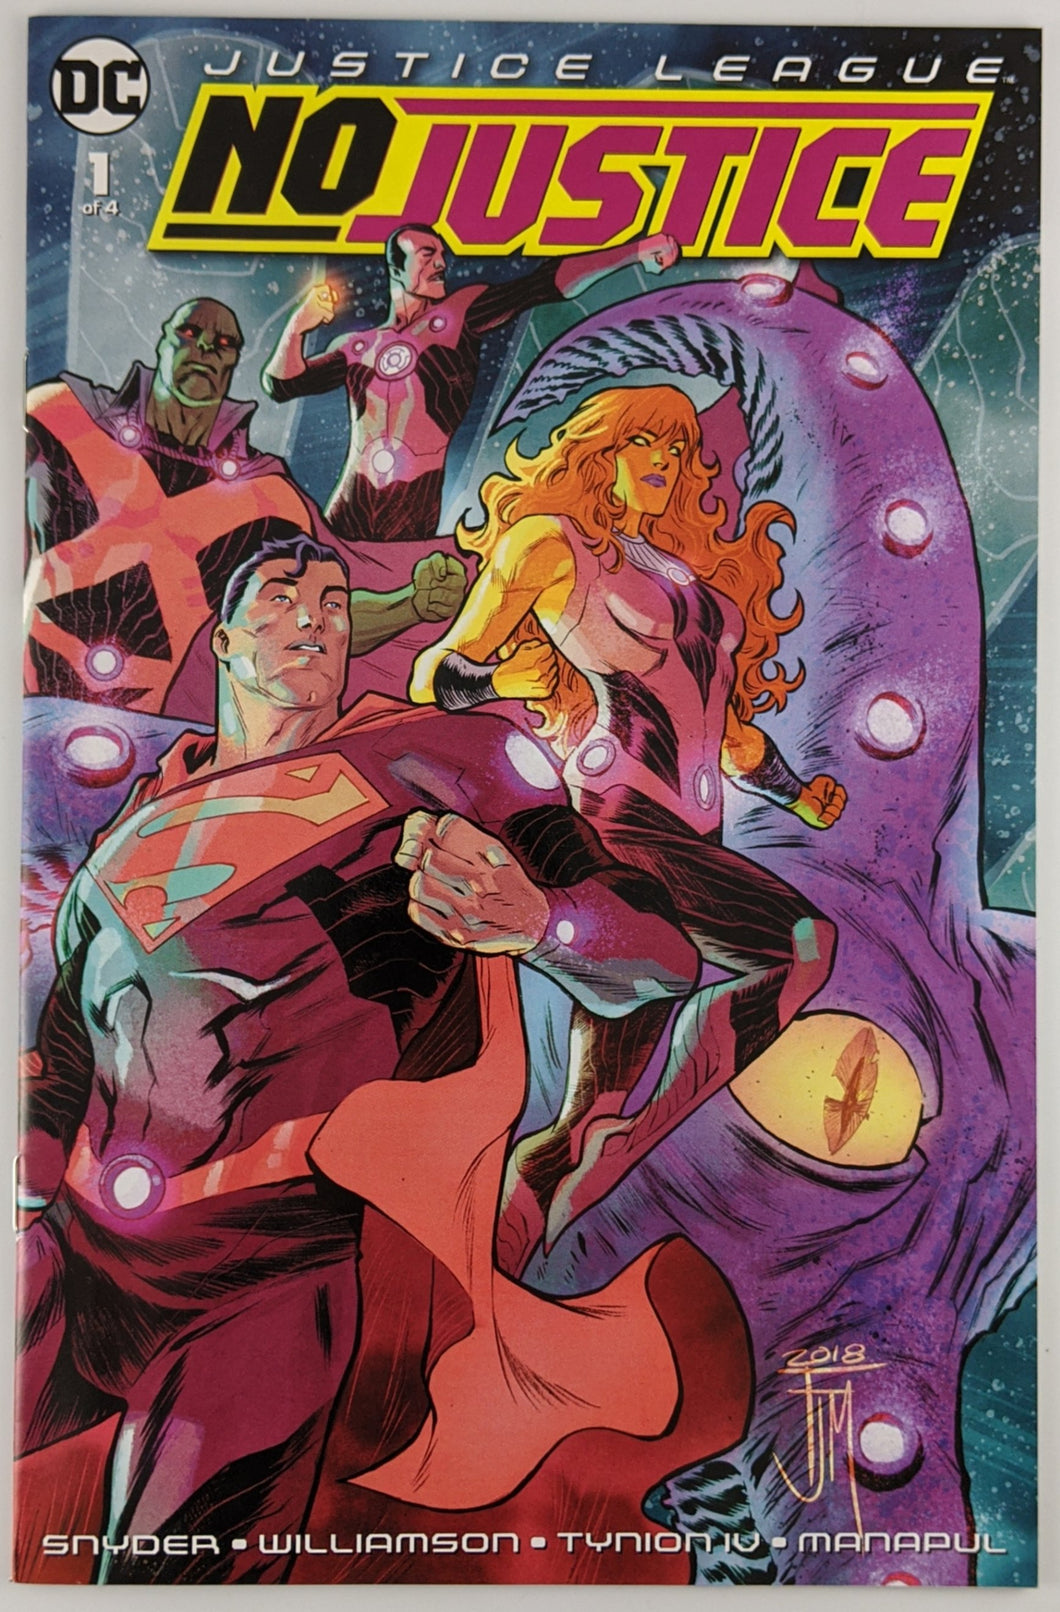 Justice League No Justice #1 Comic Book Cover Art